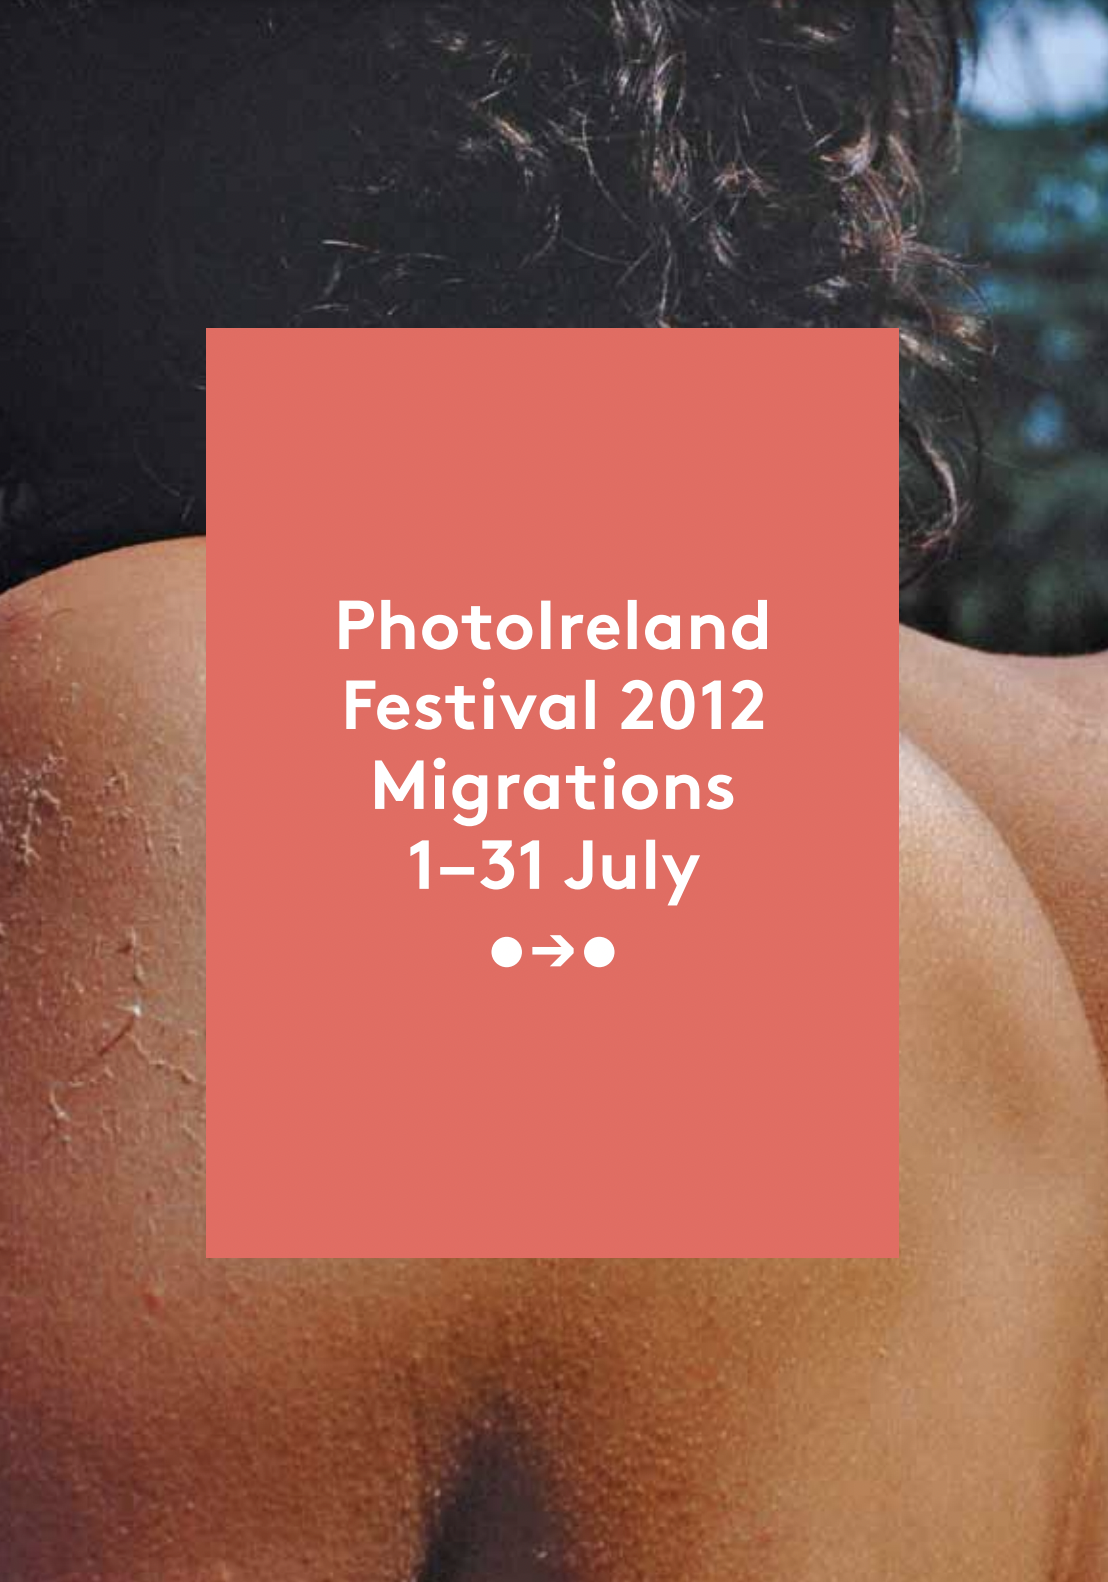 PhotoIreland Festival 2012: Migrations